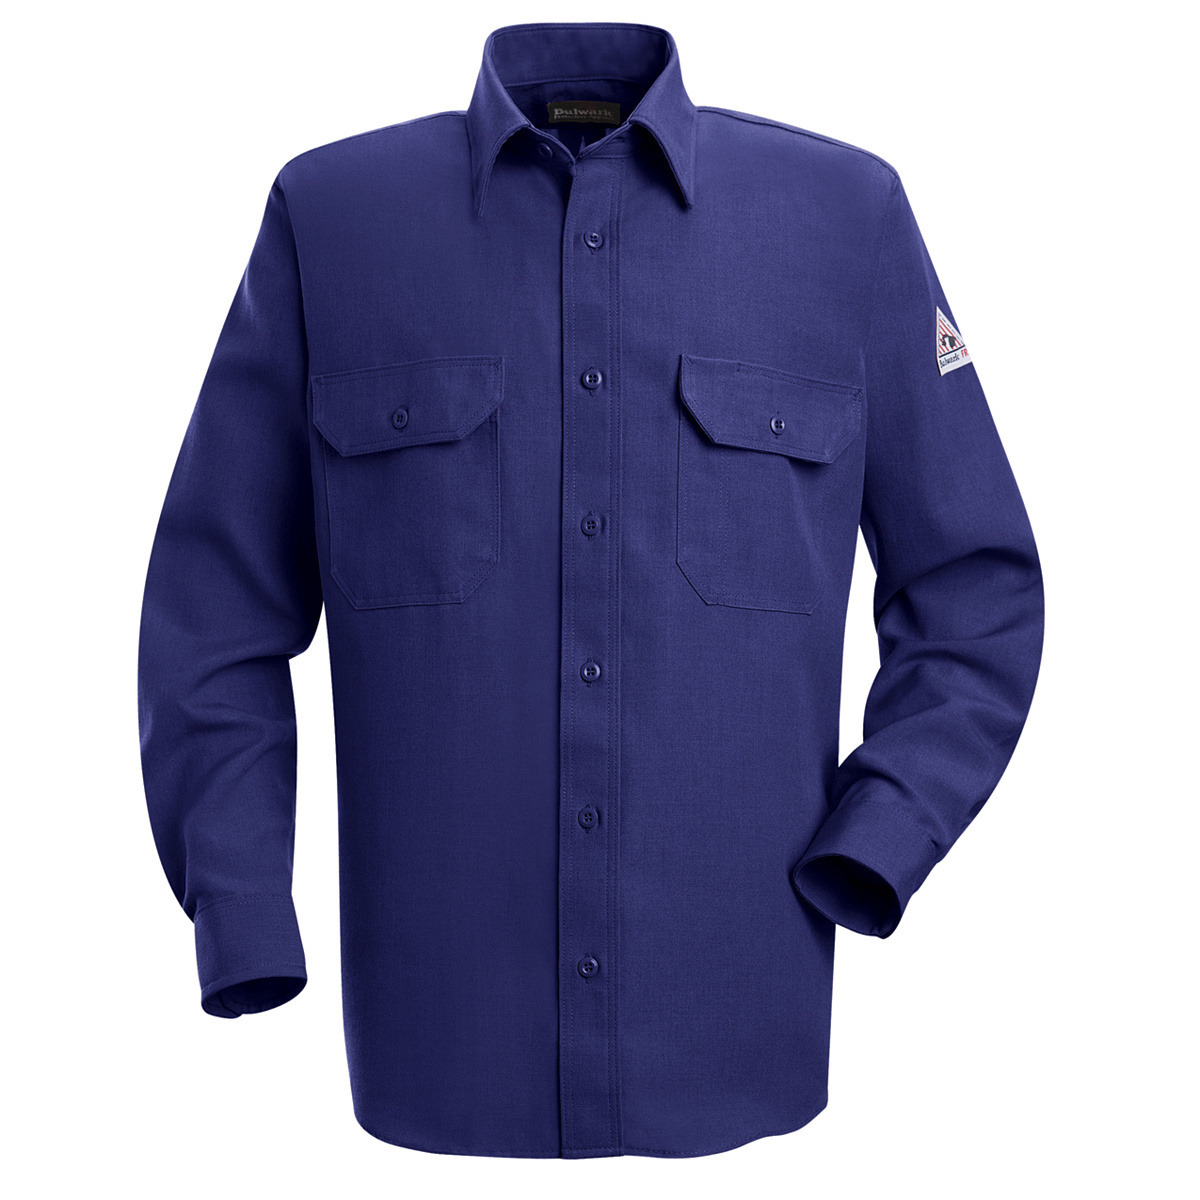 Bulwark® Medium Tall Royal Blue Nomex® IIIA/Nomex® Aramid/Kevlar® Aramid Flame Resistant Uniform Shirt With Button Front Closure